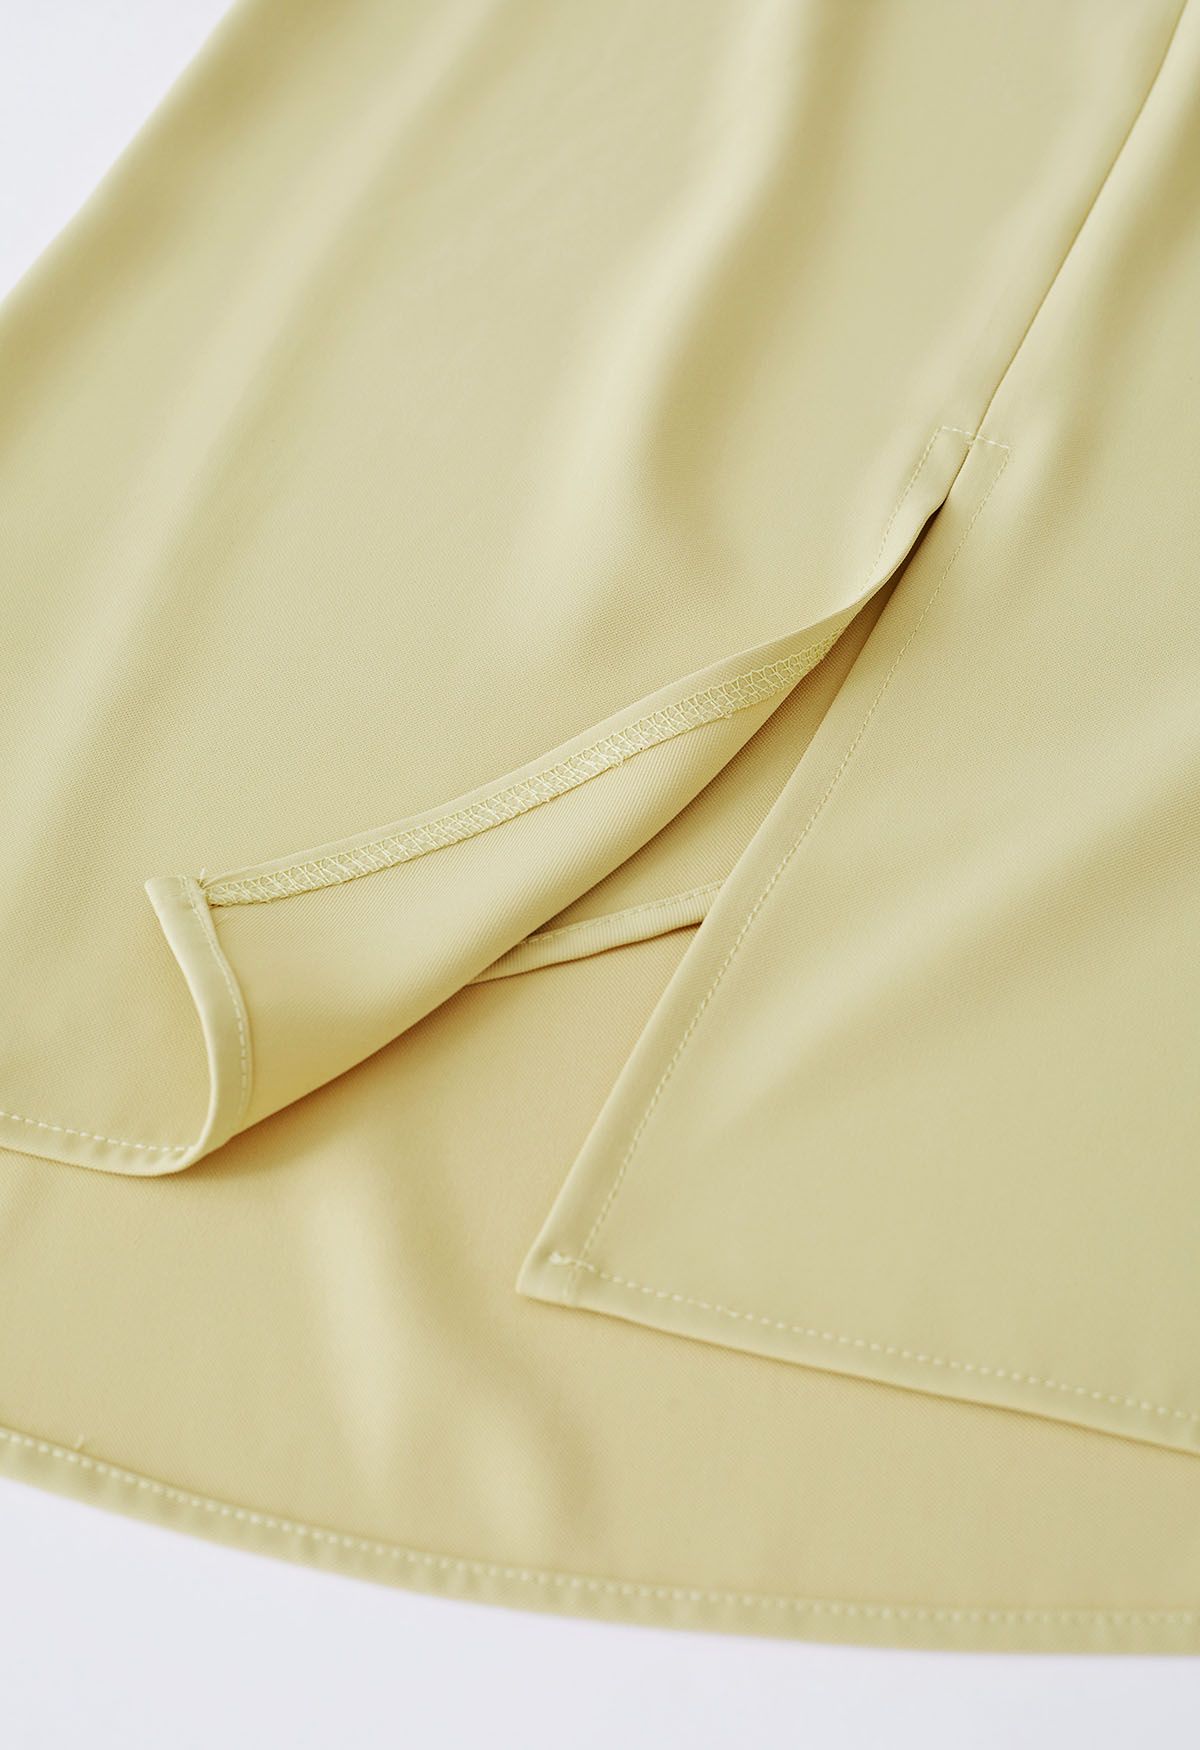 Falda midi con solapa plisada lateral en amarillo